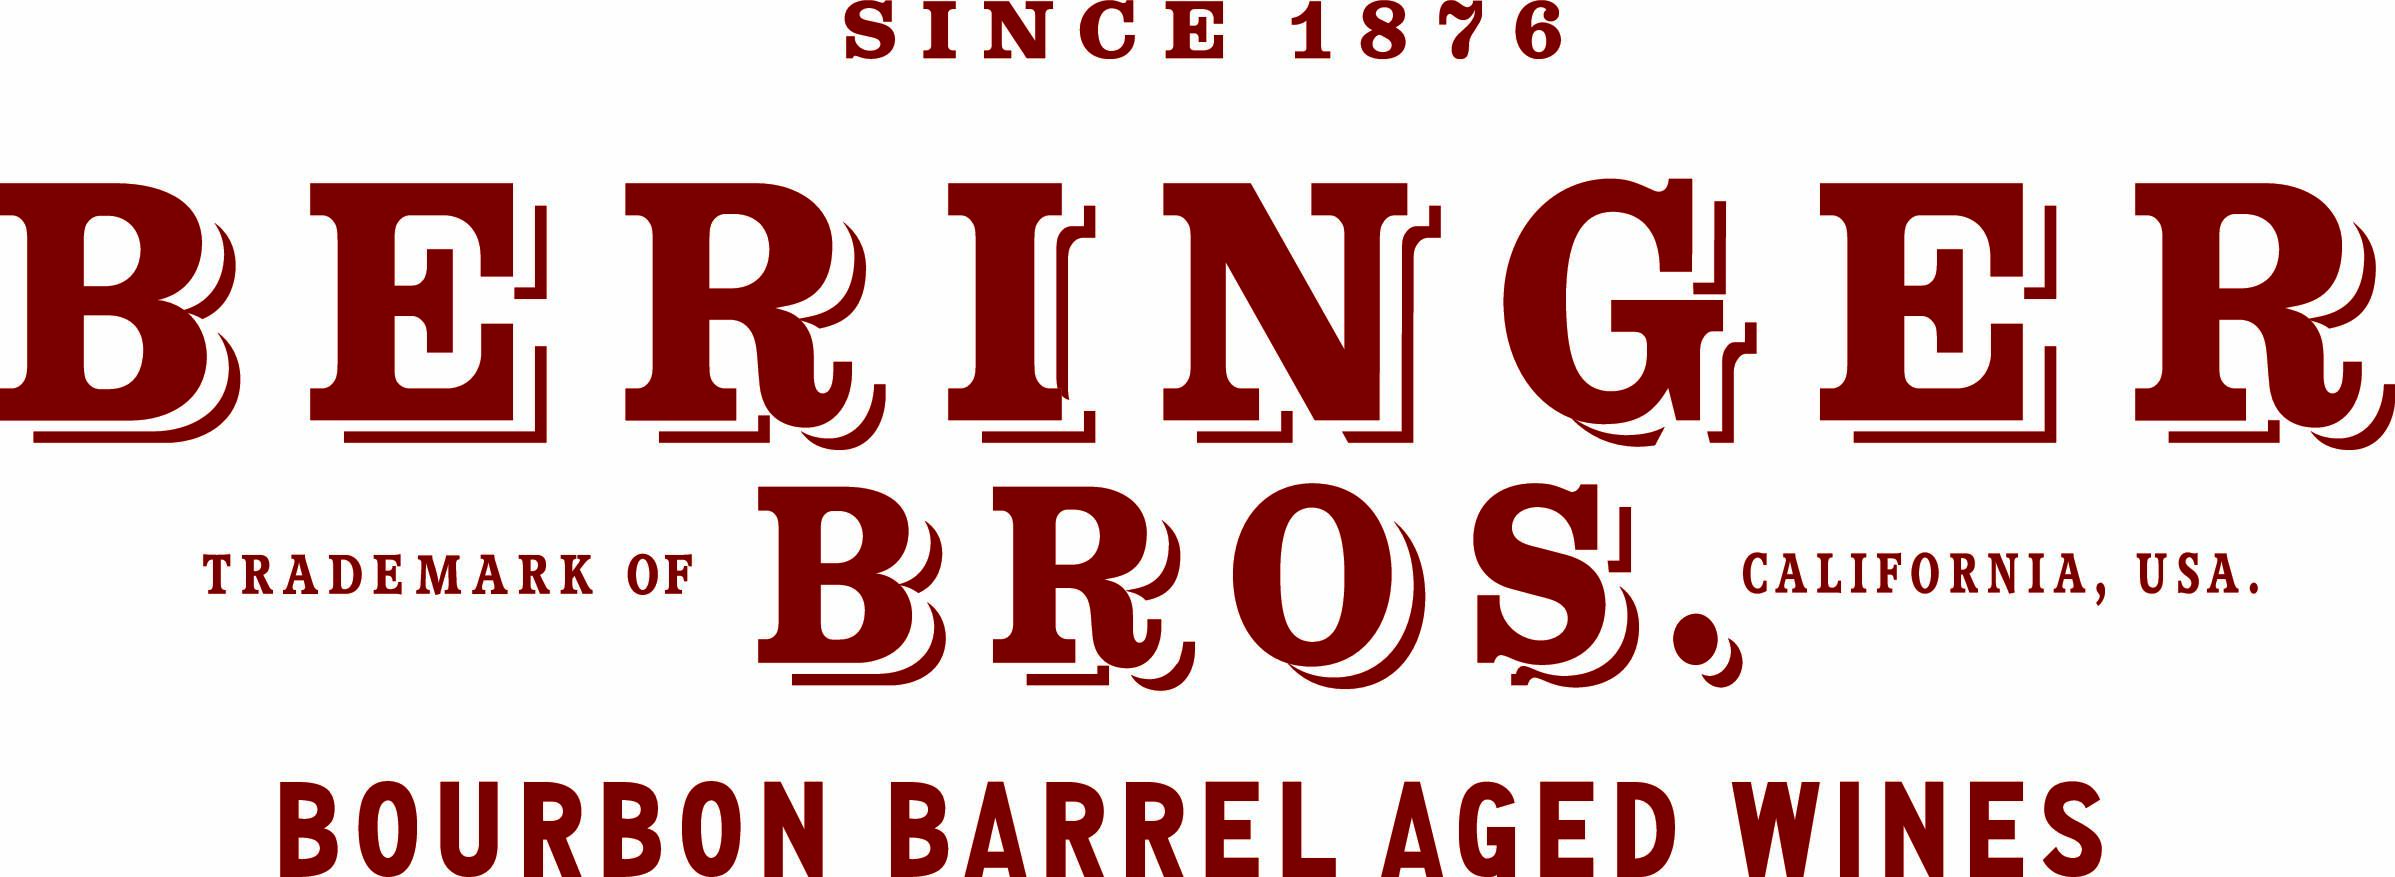 Beringer Logo - Beringer Bros. Bourbon Barrel Aged Wines - Reds Whites & Brews